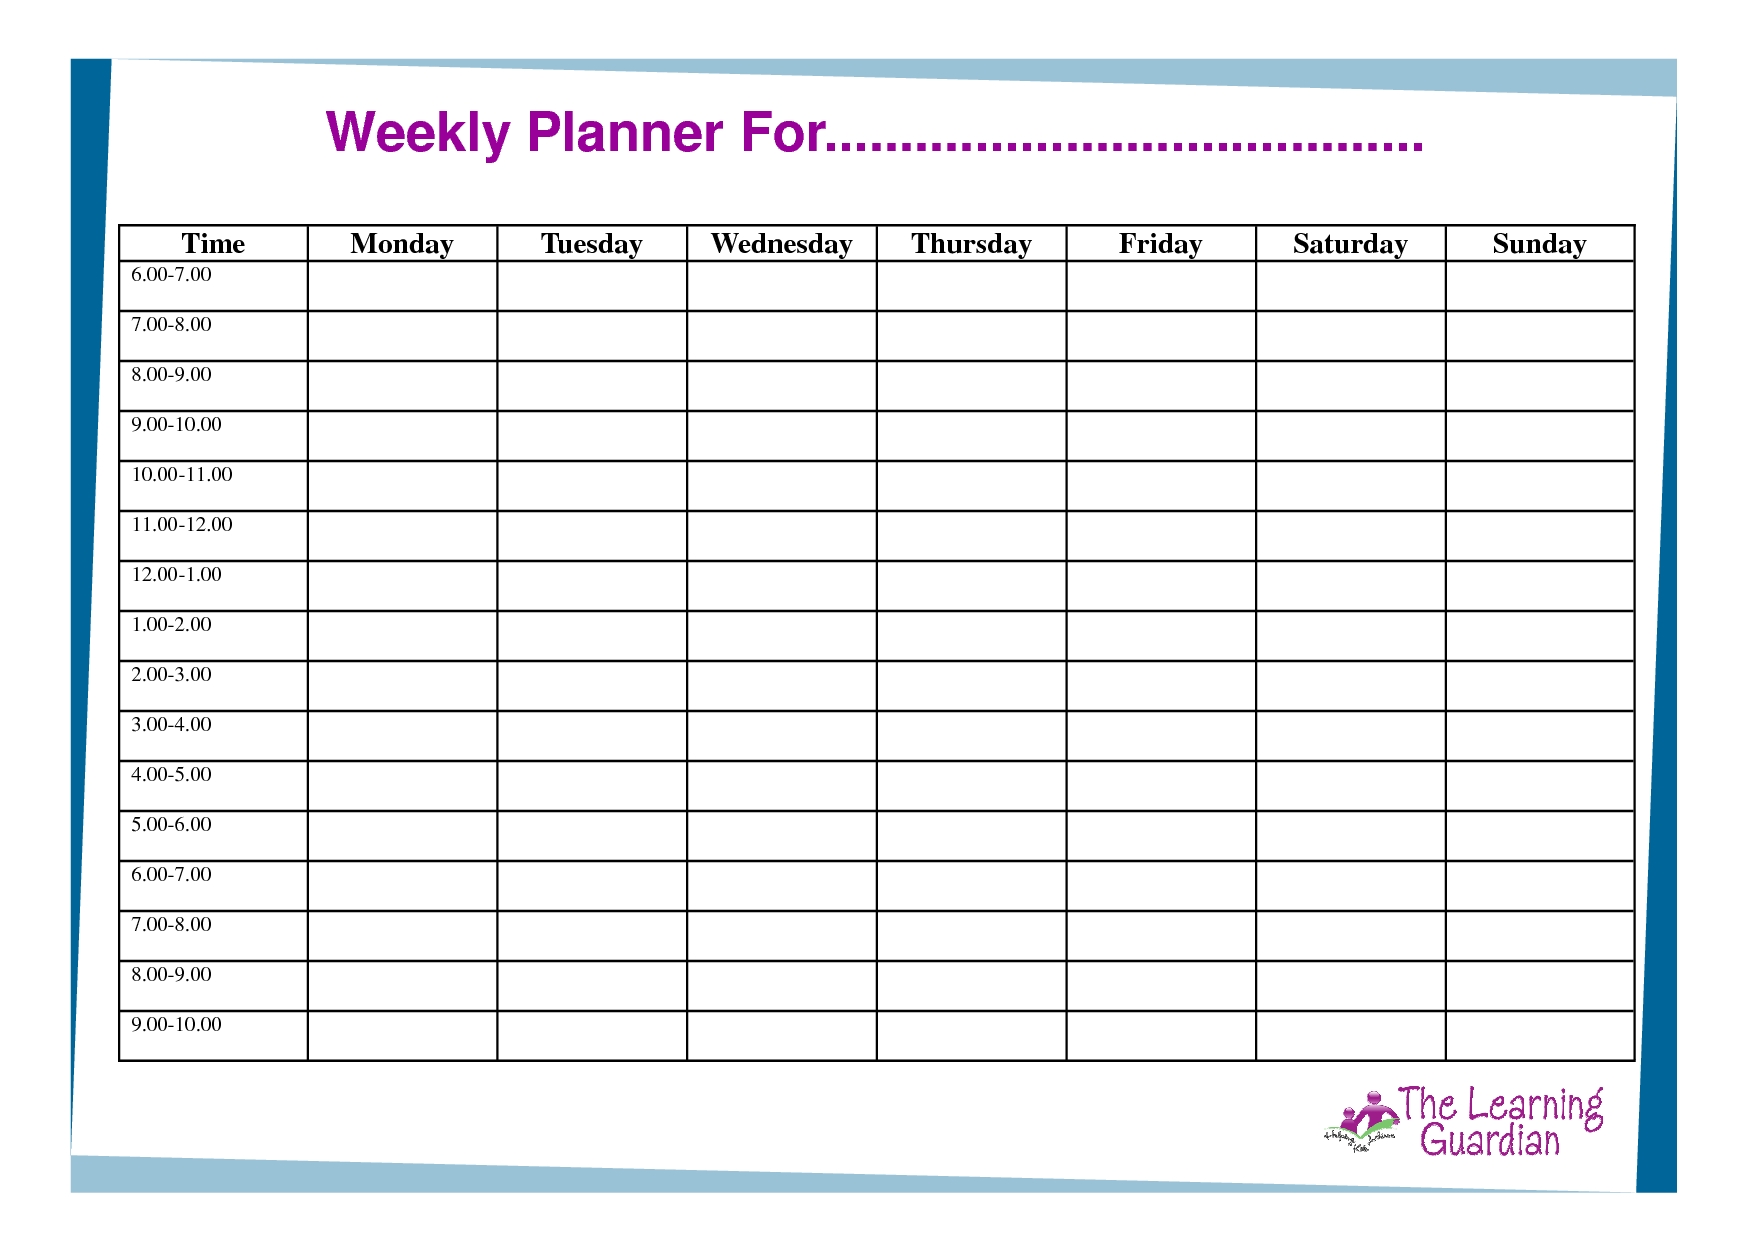 Free Printable Weekly Planner Templates In 2020 | Weekly